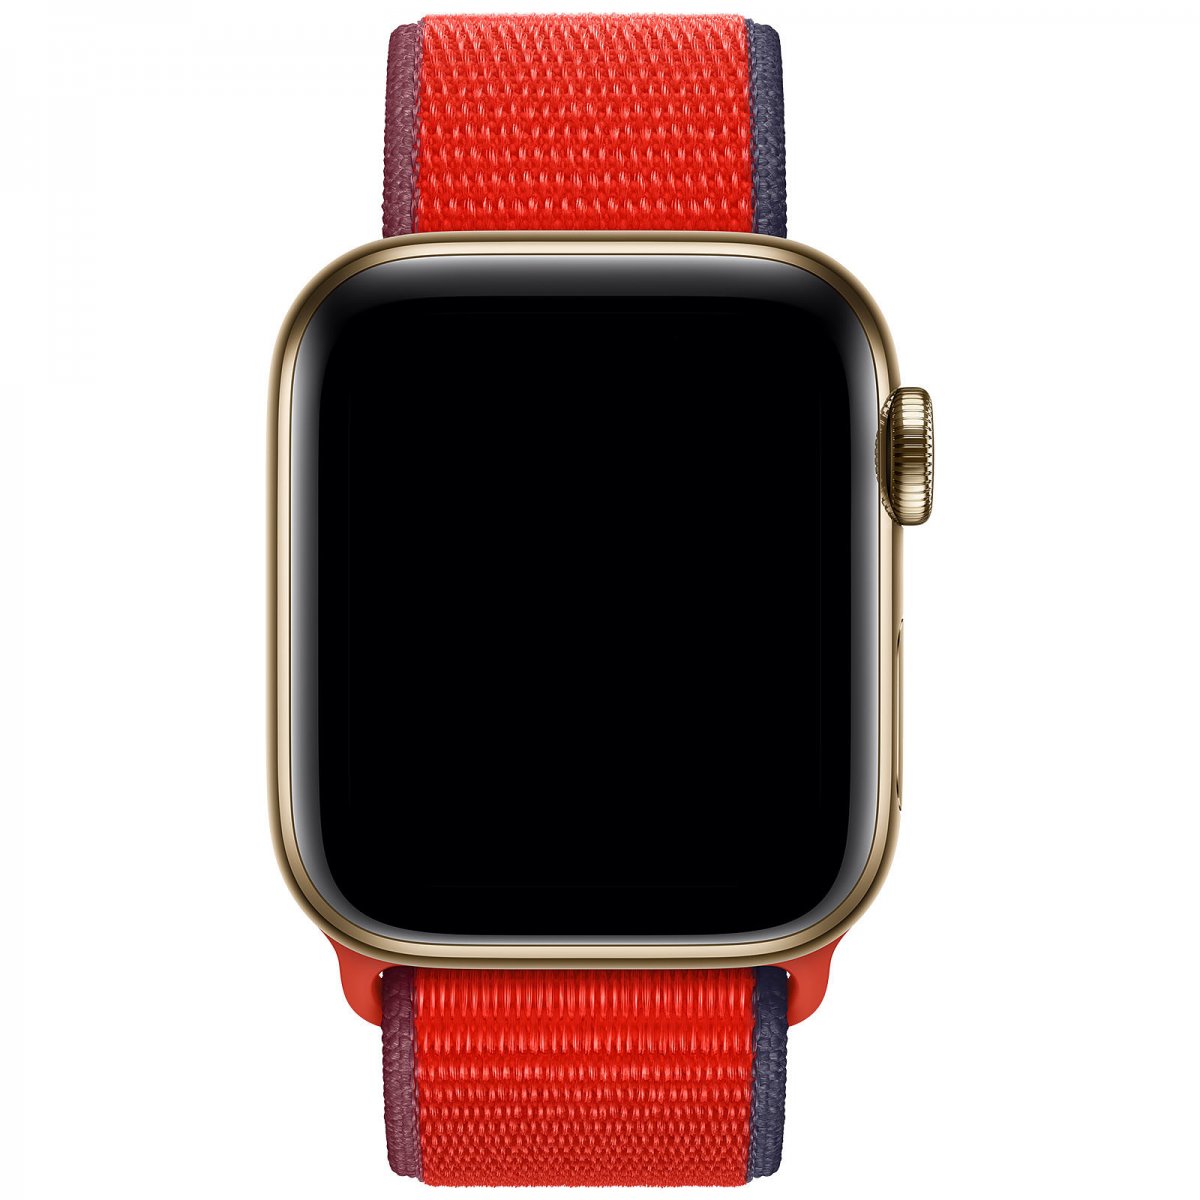 Řemínek iMore NYLON Apple Watch Series 1/2/3 42mm - Red 2020